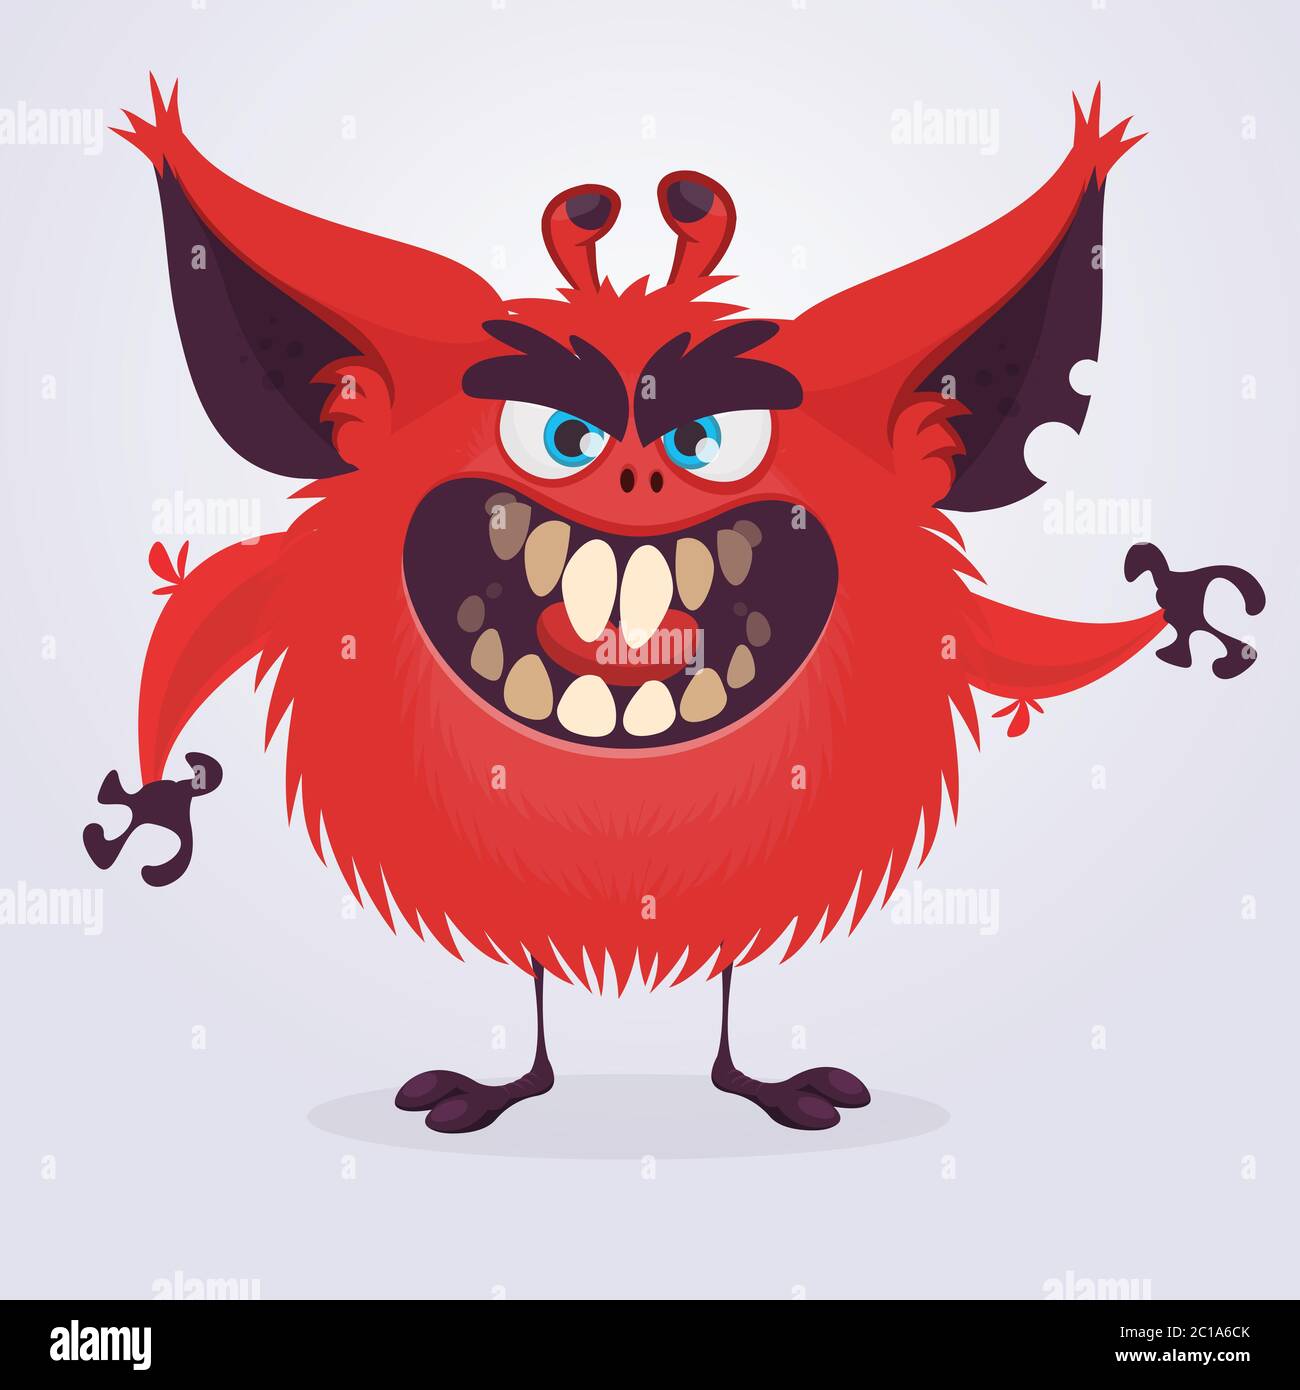 Scary red cartoon monster waving hands. Halloween vector illustration Stock Vector